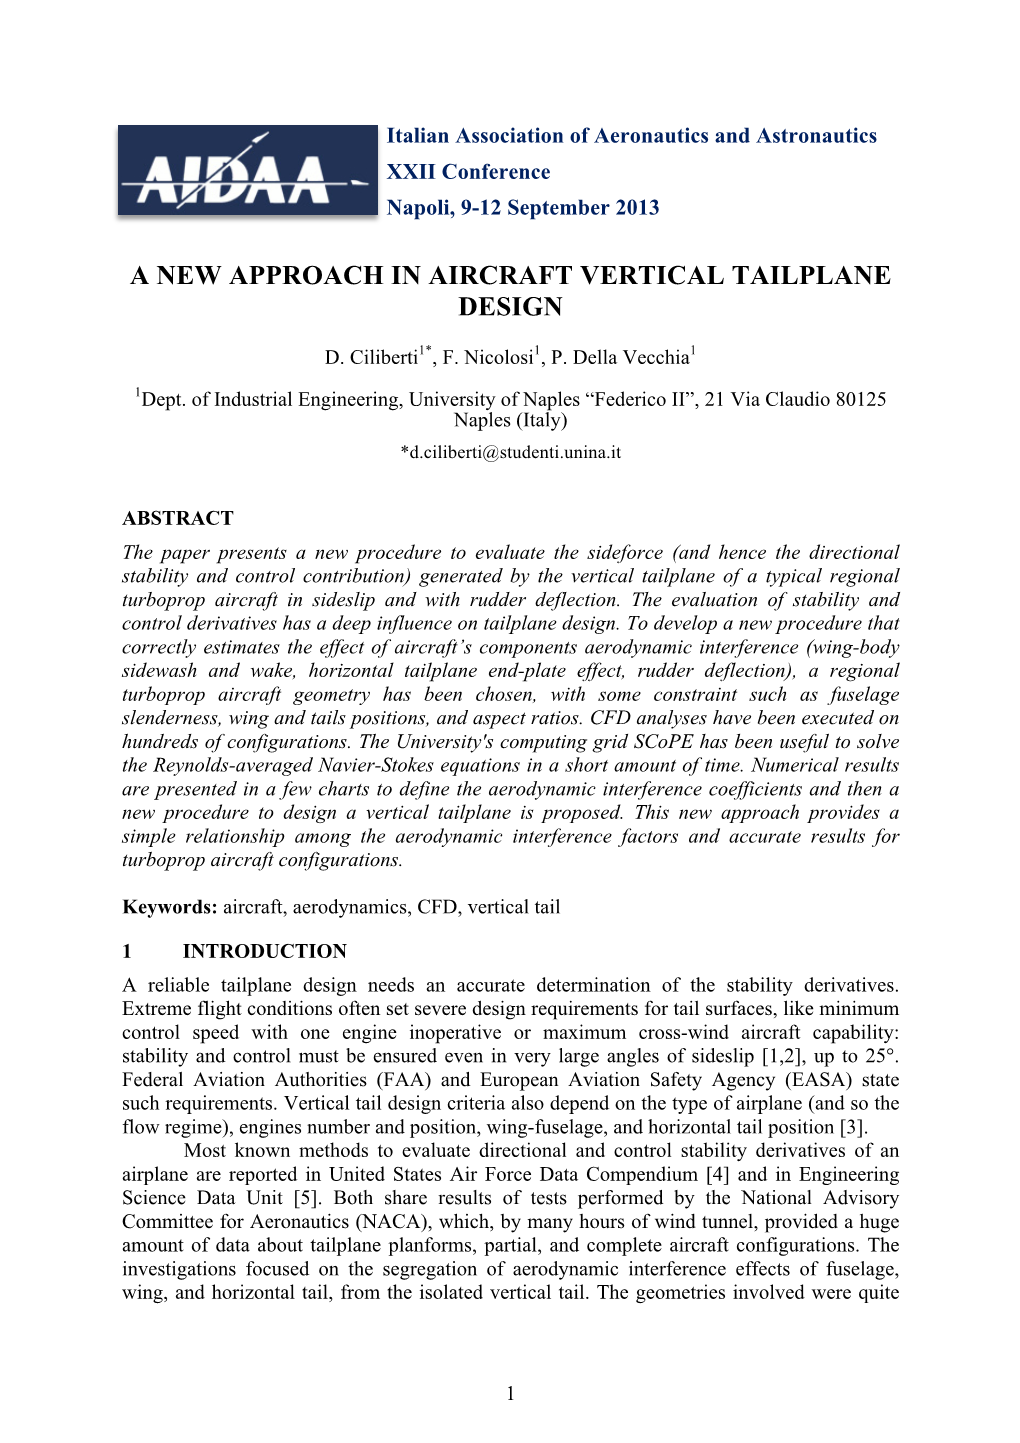 A New Approach in Aircraft Vertical Tailplane Design